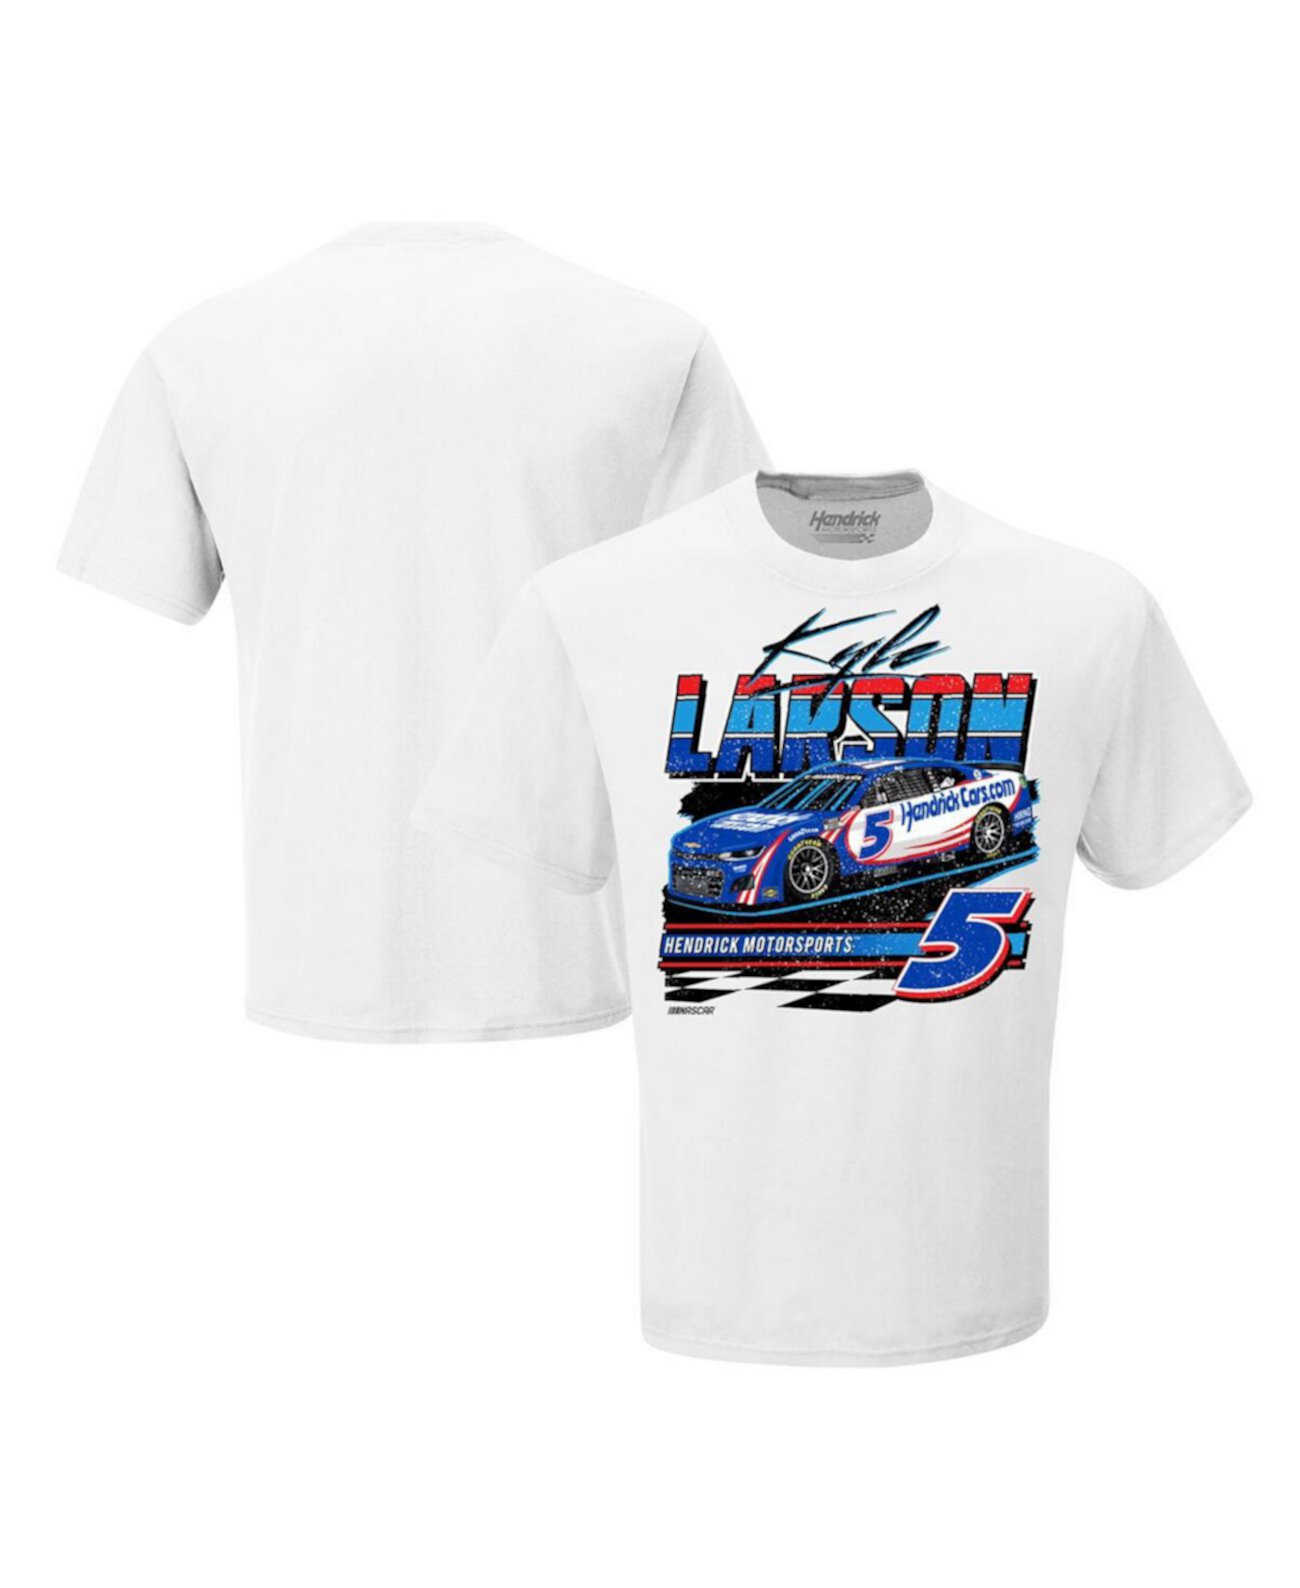 Мужская белая футболка на танкетке Kyle Larson Hendrickcars.com Hendrick Motorsports Team Collection